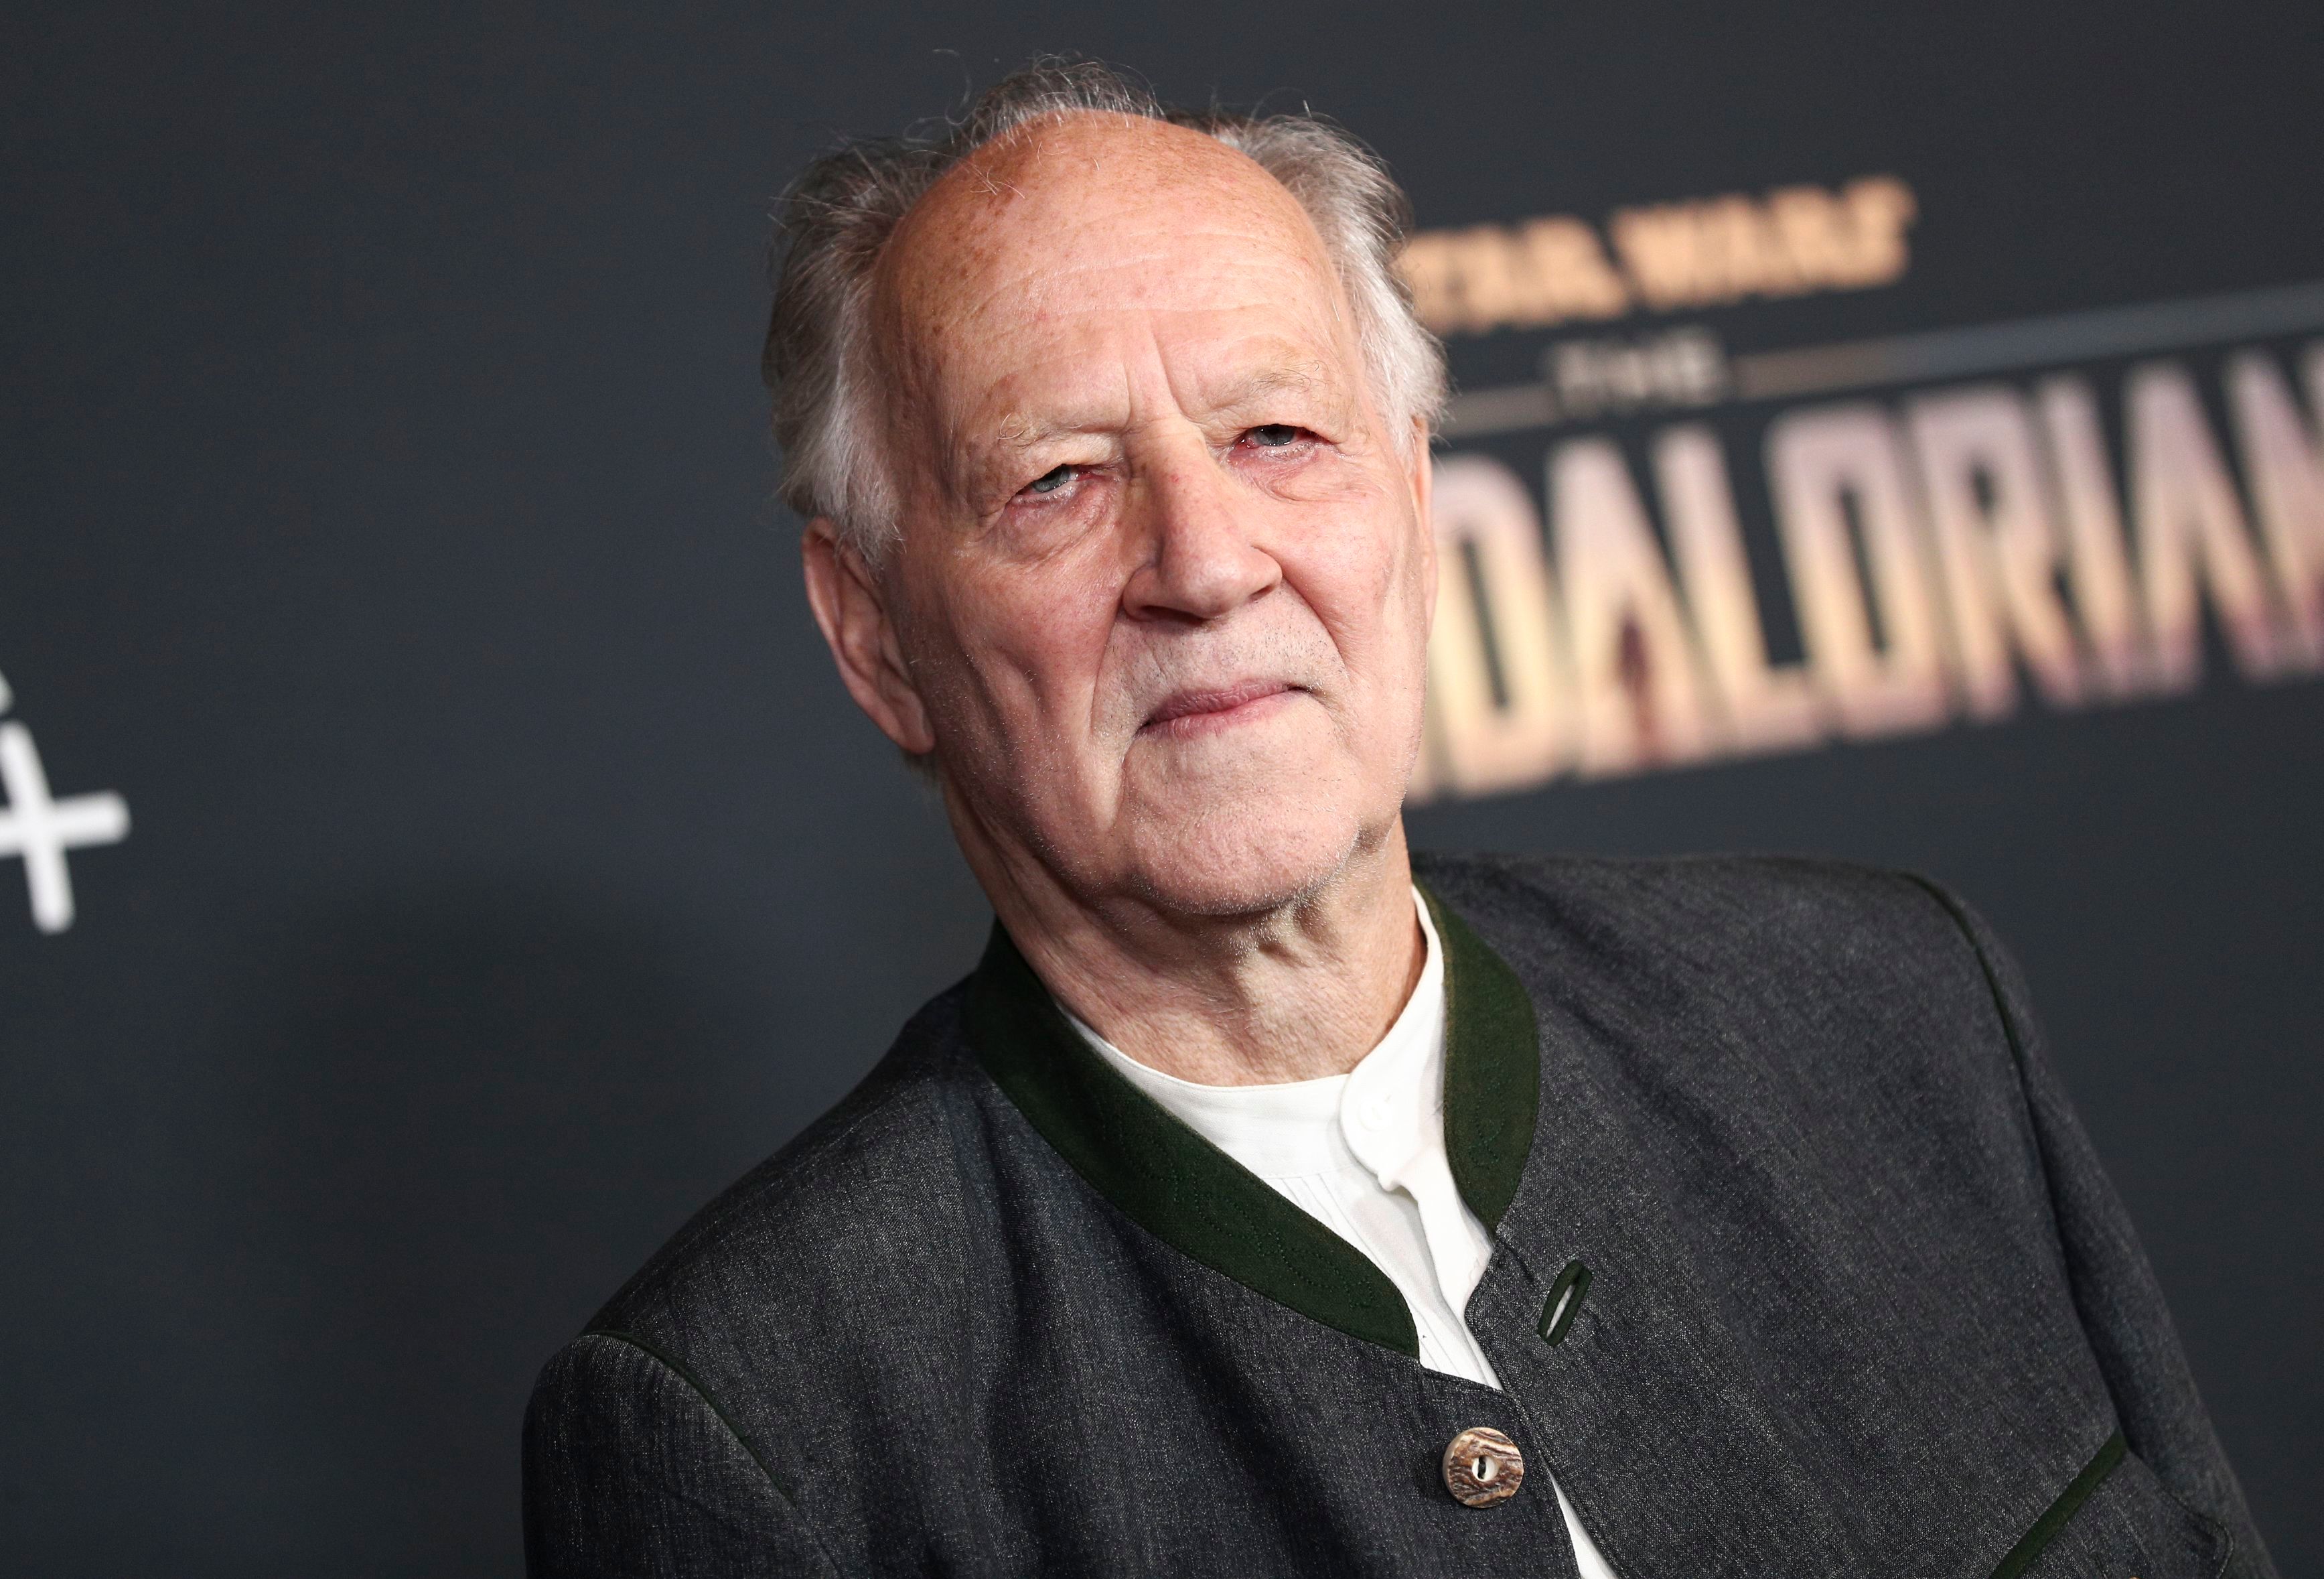 Werner Herzog To Receive Cinematographers’ Board Of Governors Award - deadline.com - USA